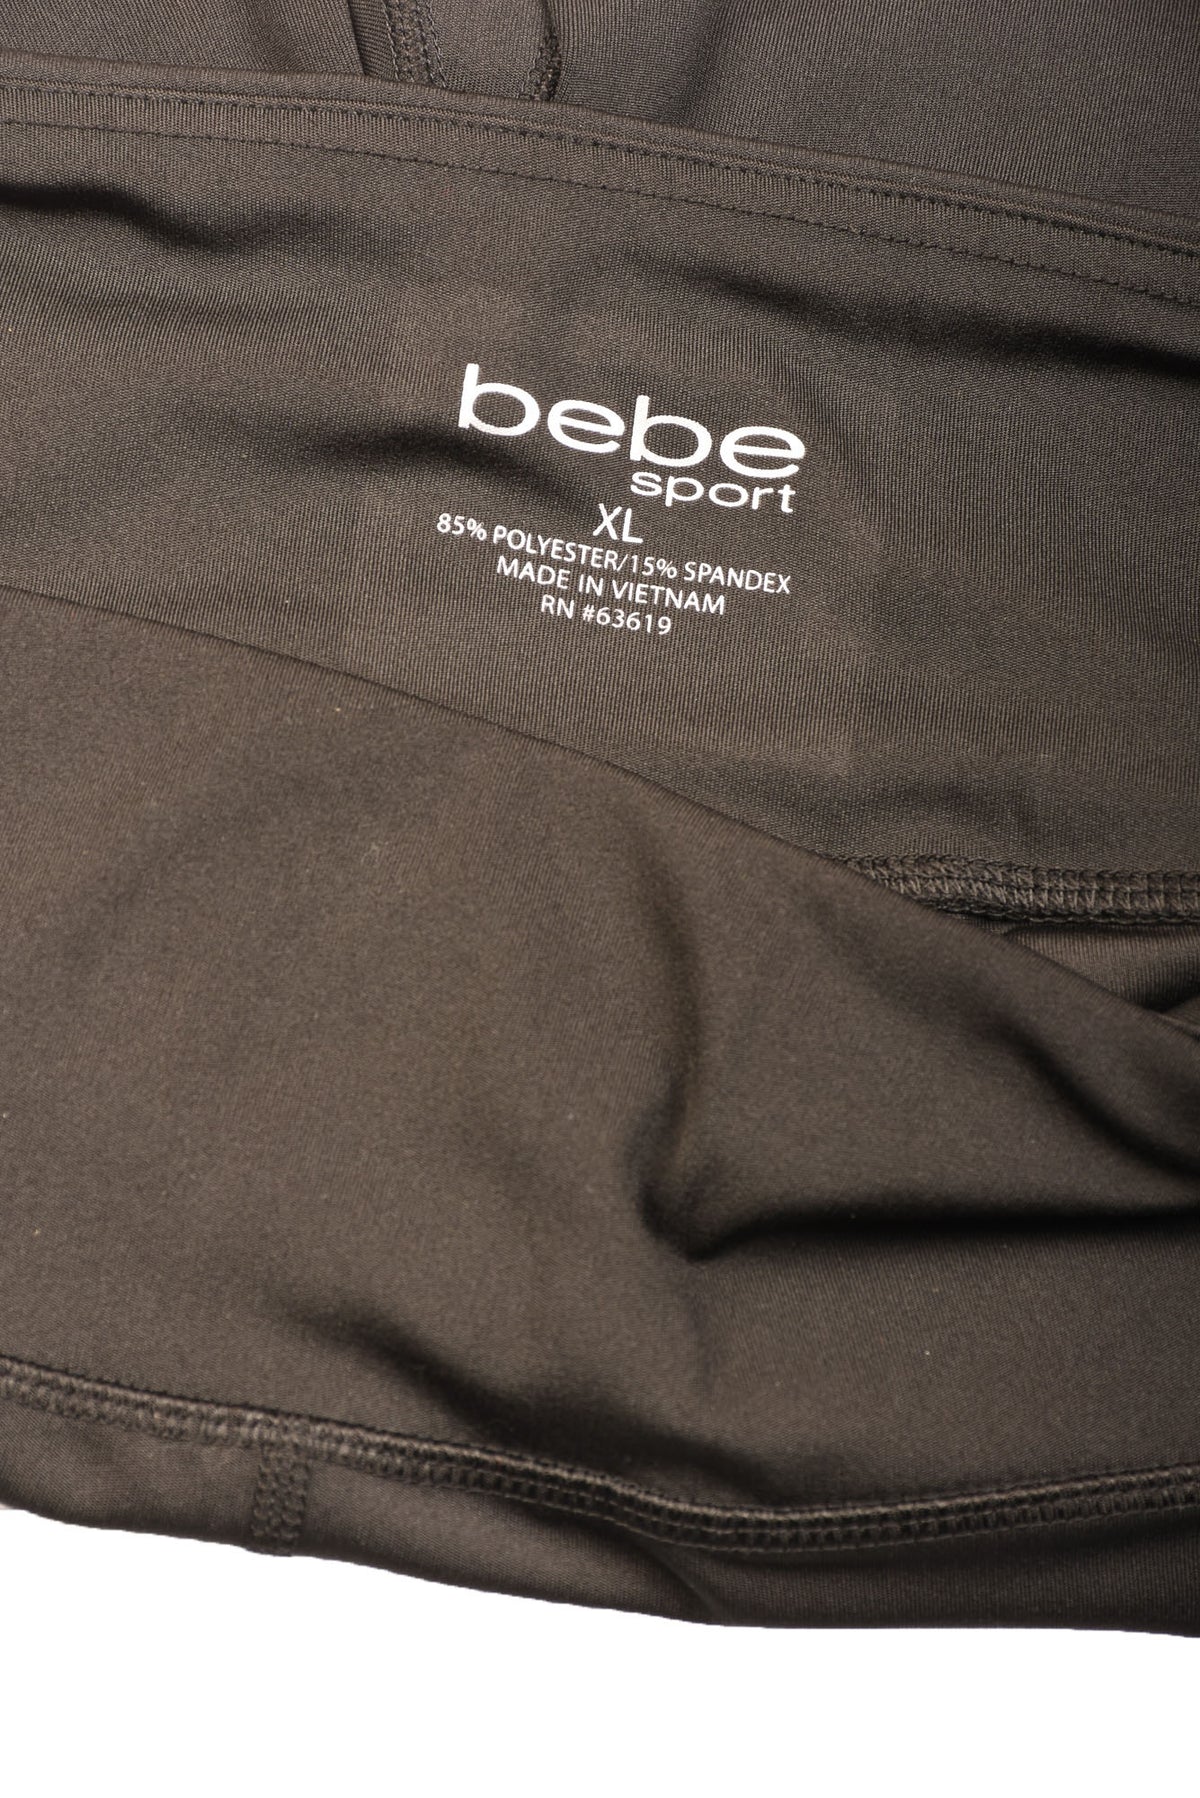 Bebe Sport Size XL Women's Activewear Shorts - Your Designer Thrift